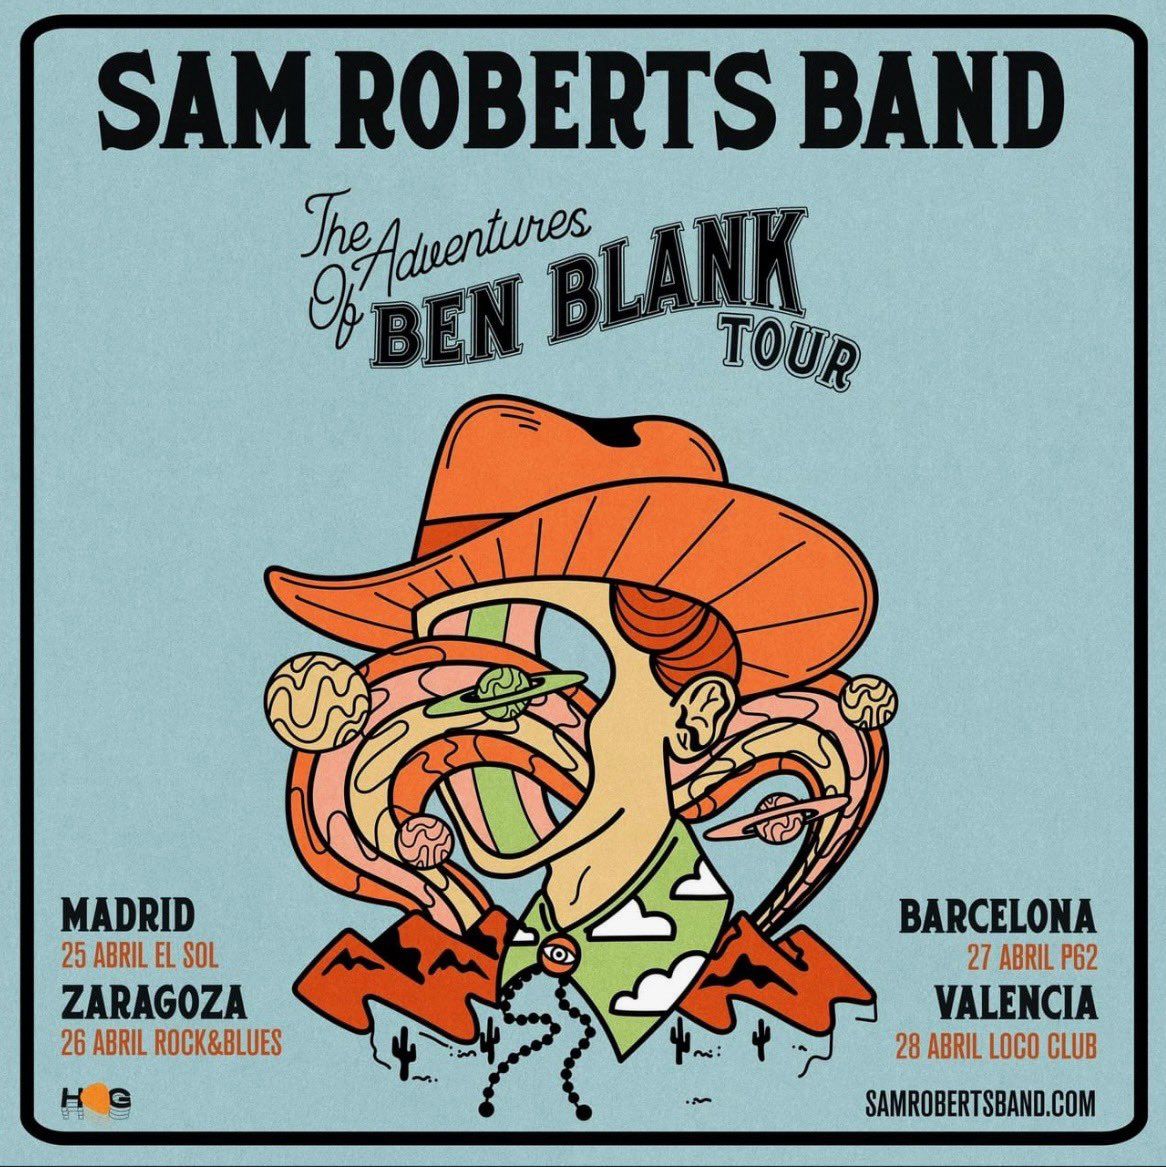 Sam Roberts Band (18+)